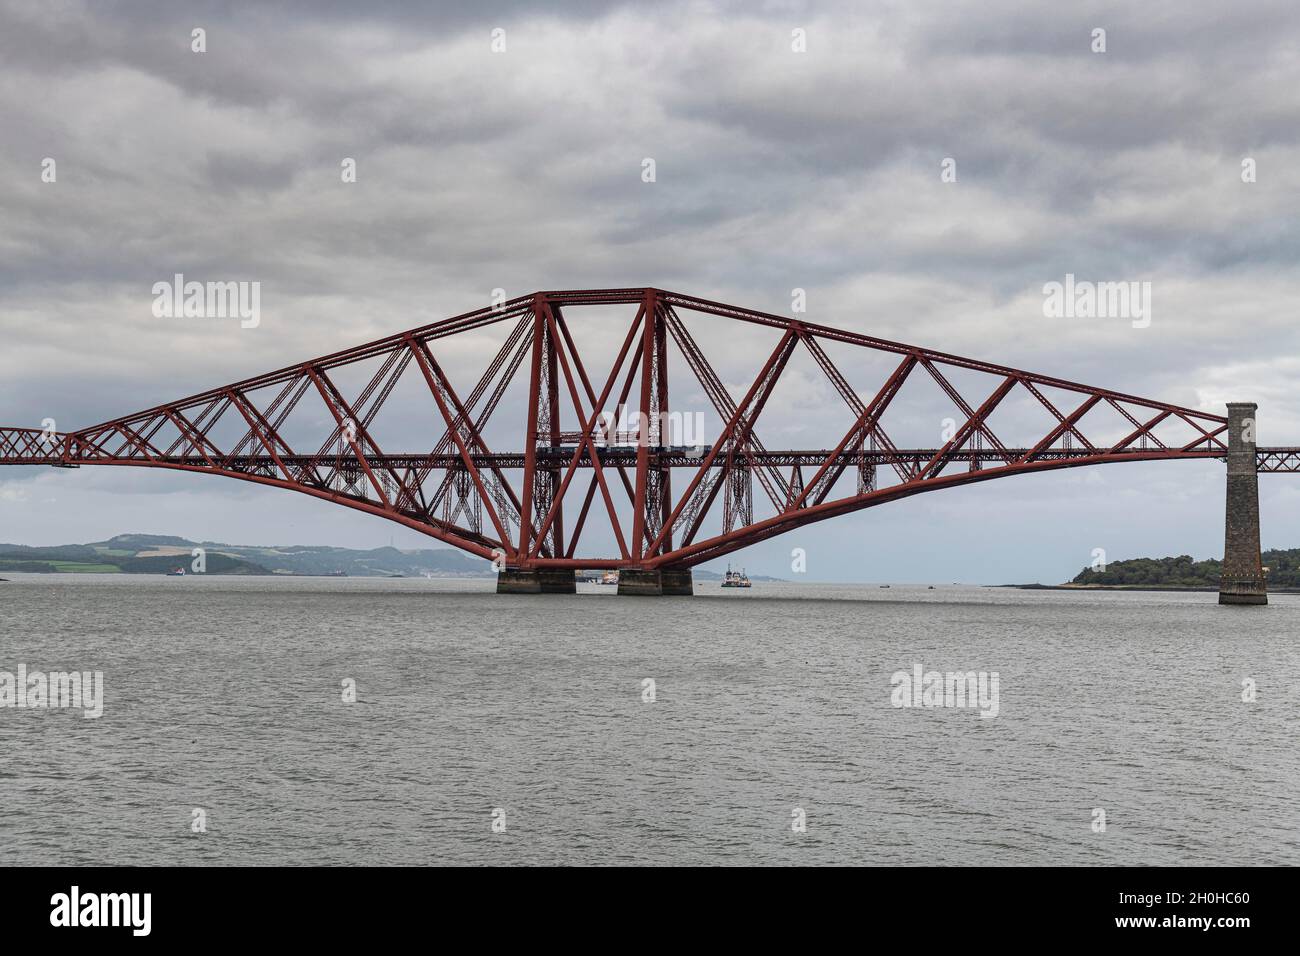 Patrimonio de la Humanidad de la UNESCO Forth Bridge, puente voladizo, Escocia, Reino Unido Foto de stock